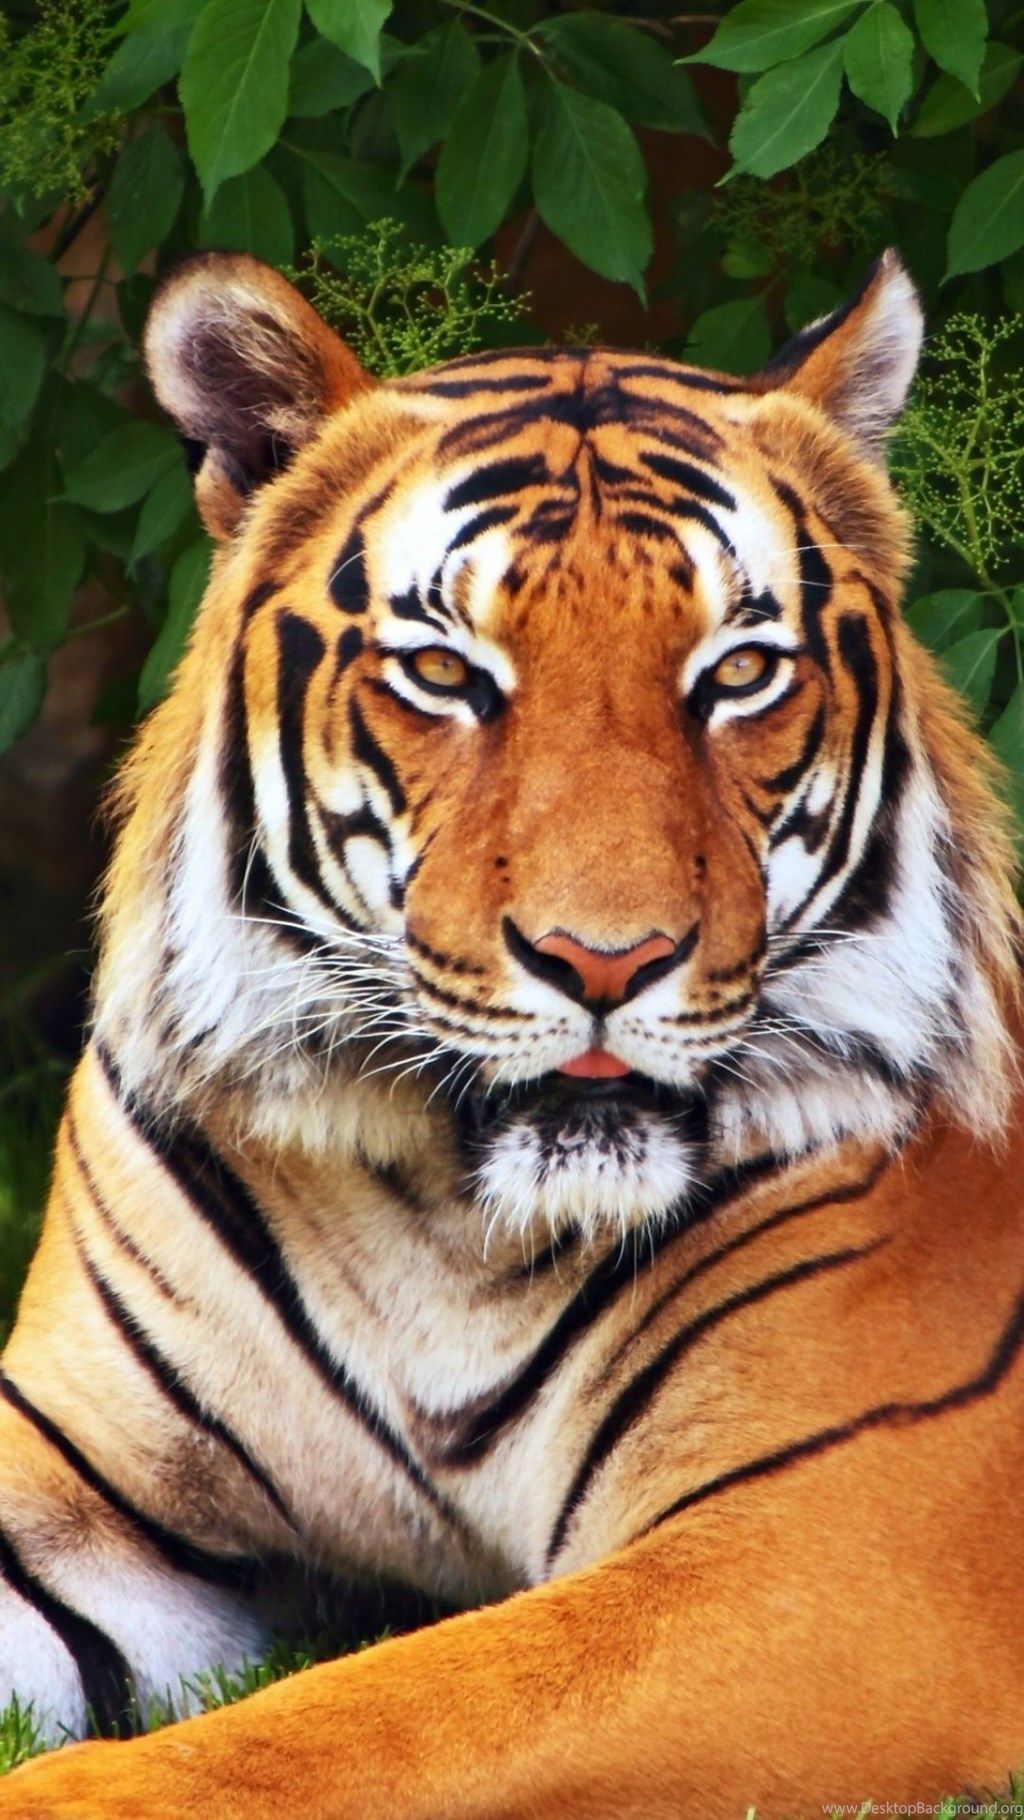 Fondos de iPhone de Tiger - Fondos de iPhone de Tiger gratis